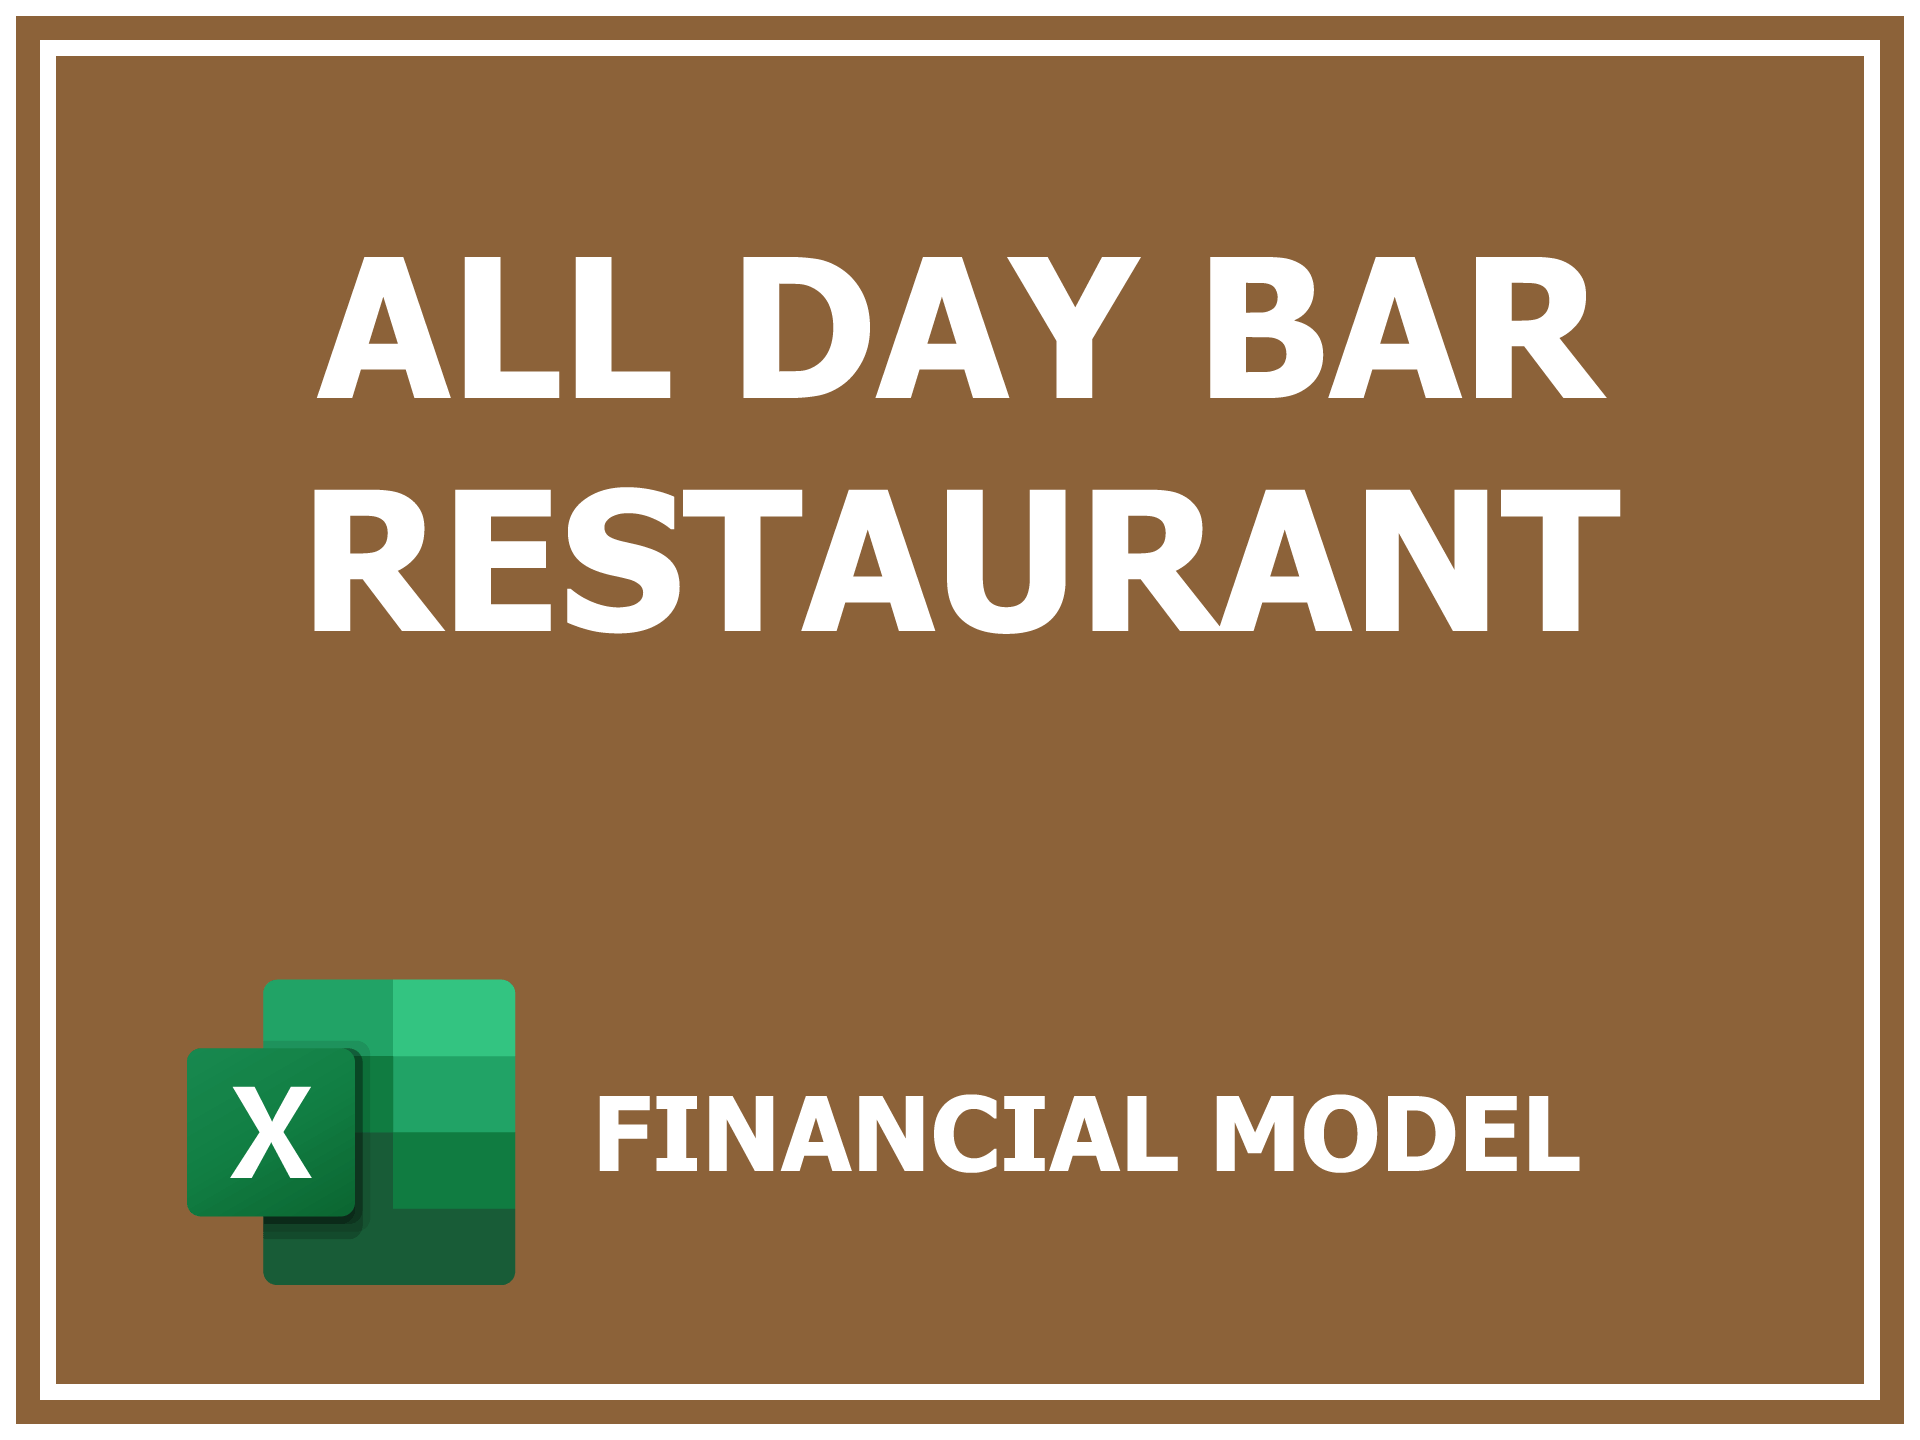 All Day Bar Restaurant